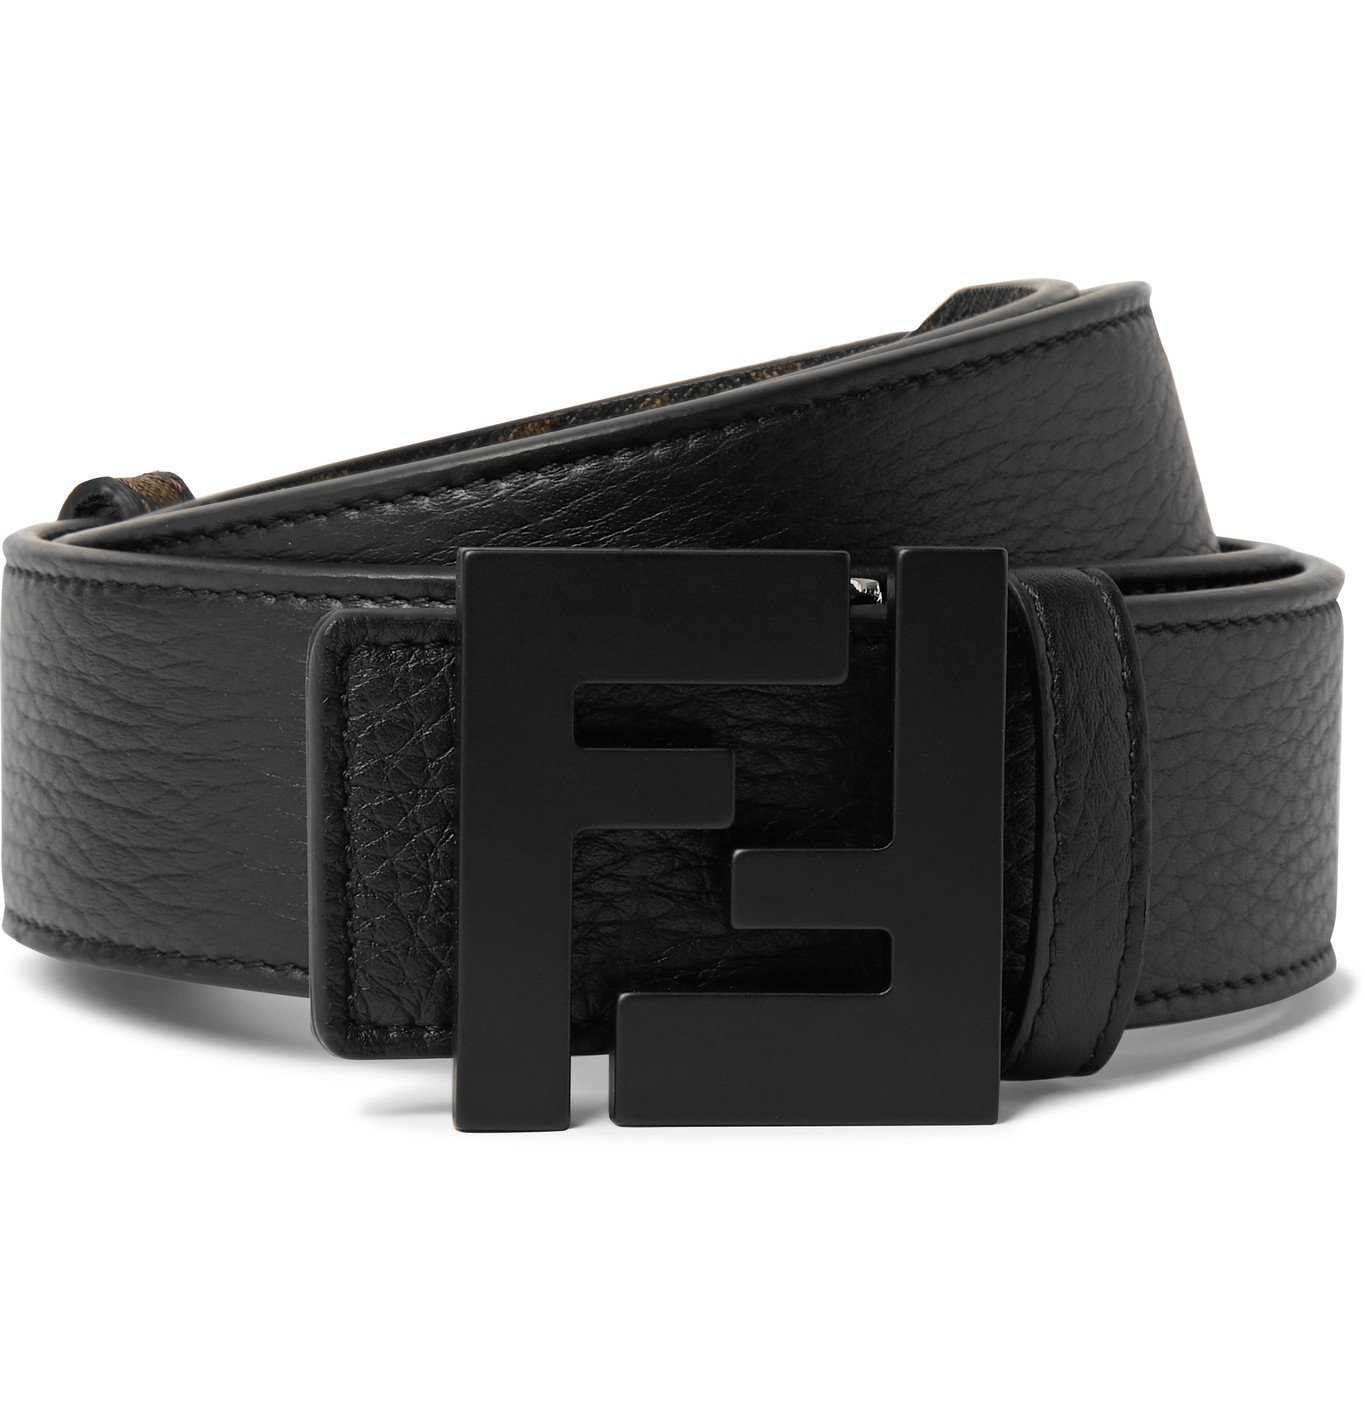 black and grey fendi belt